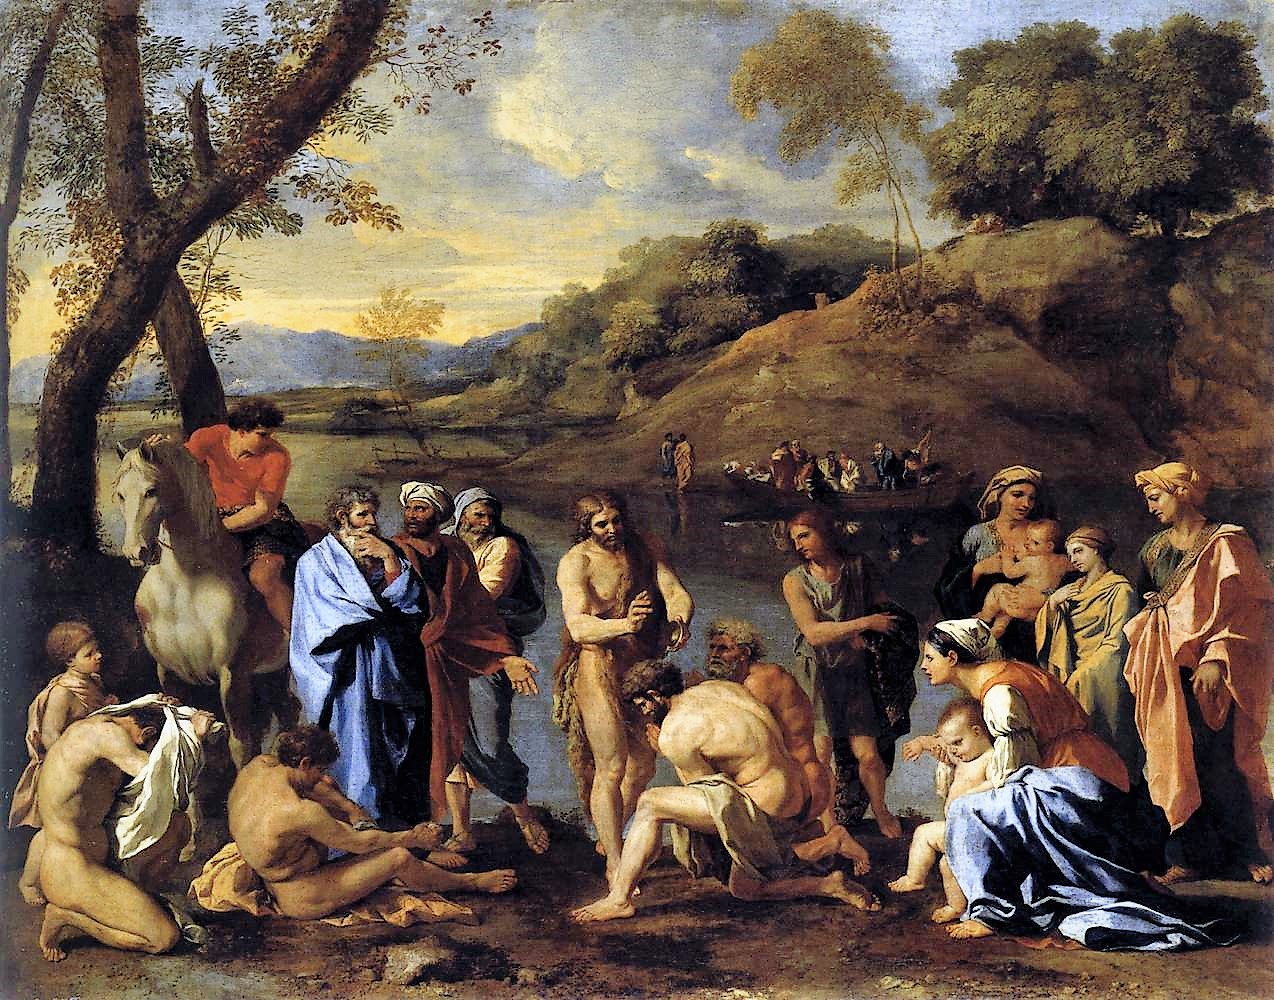 St. John the Baptist Baptizing the People, Nicolas Poussin, ca. 1600